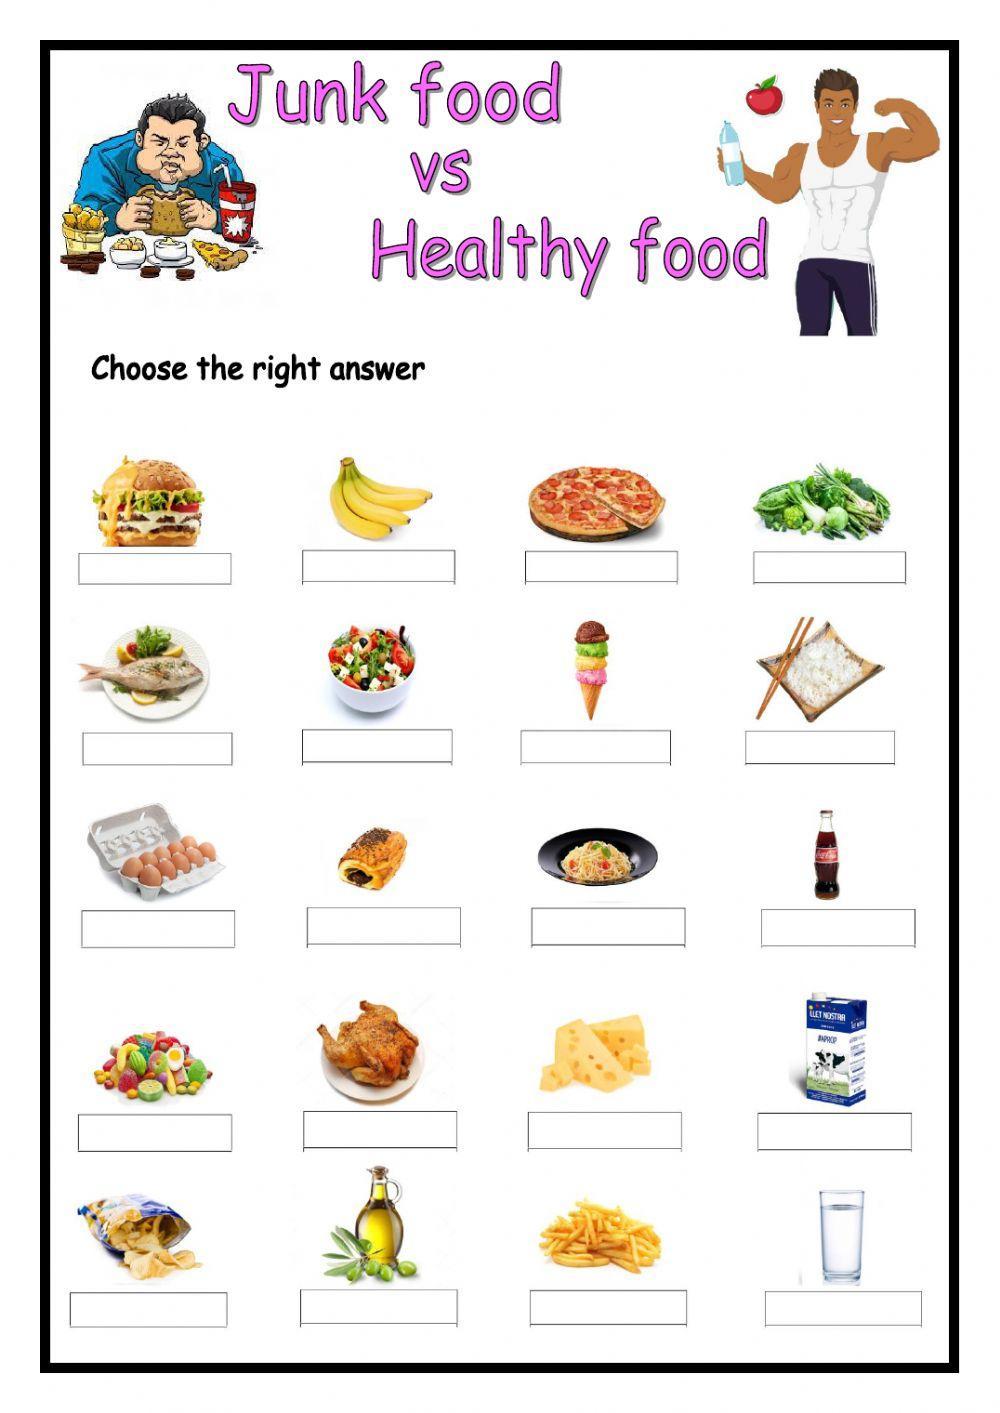 Junk food vs healthy food